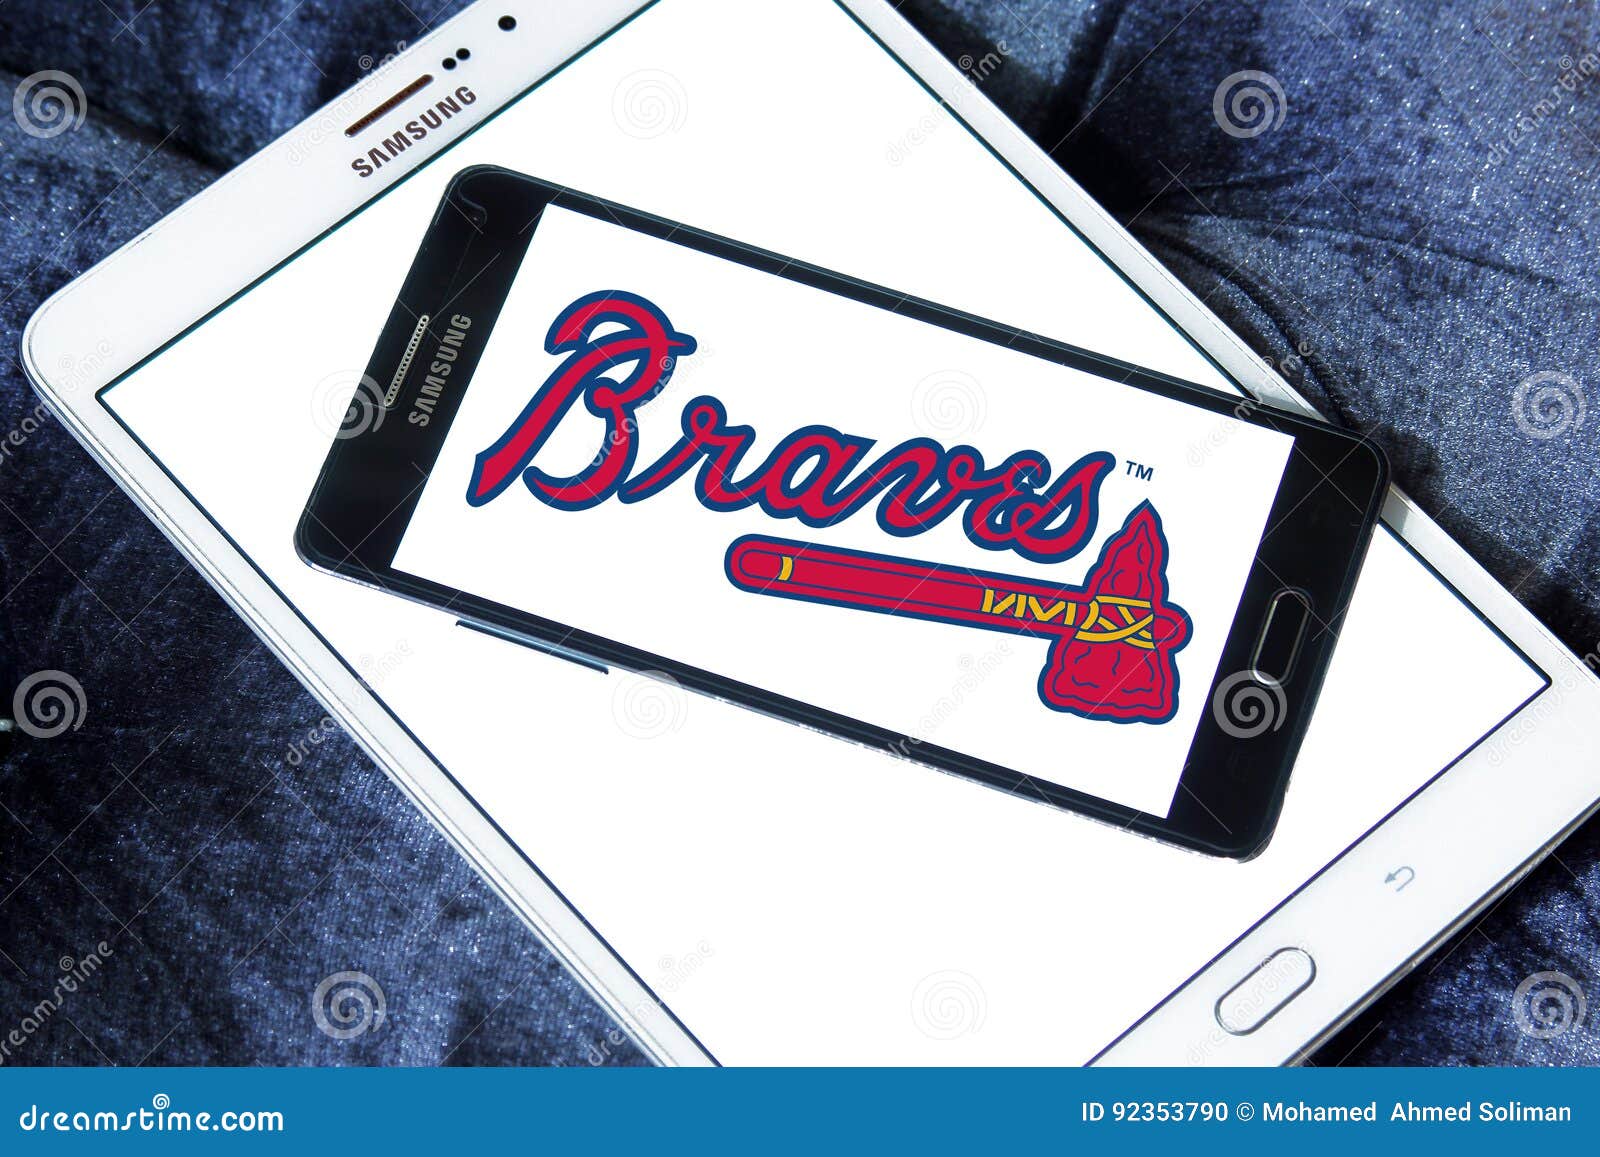 Atlanta Braves Baseball Team Logo Editorial Image - Image of icon, mobile:  92353790